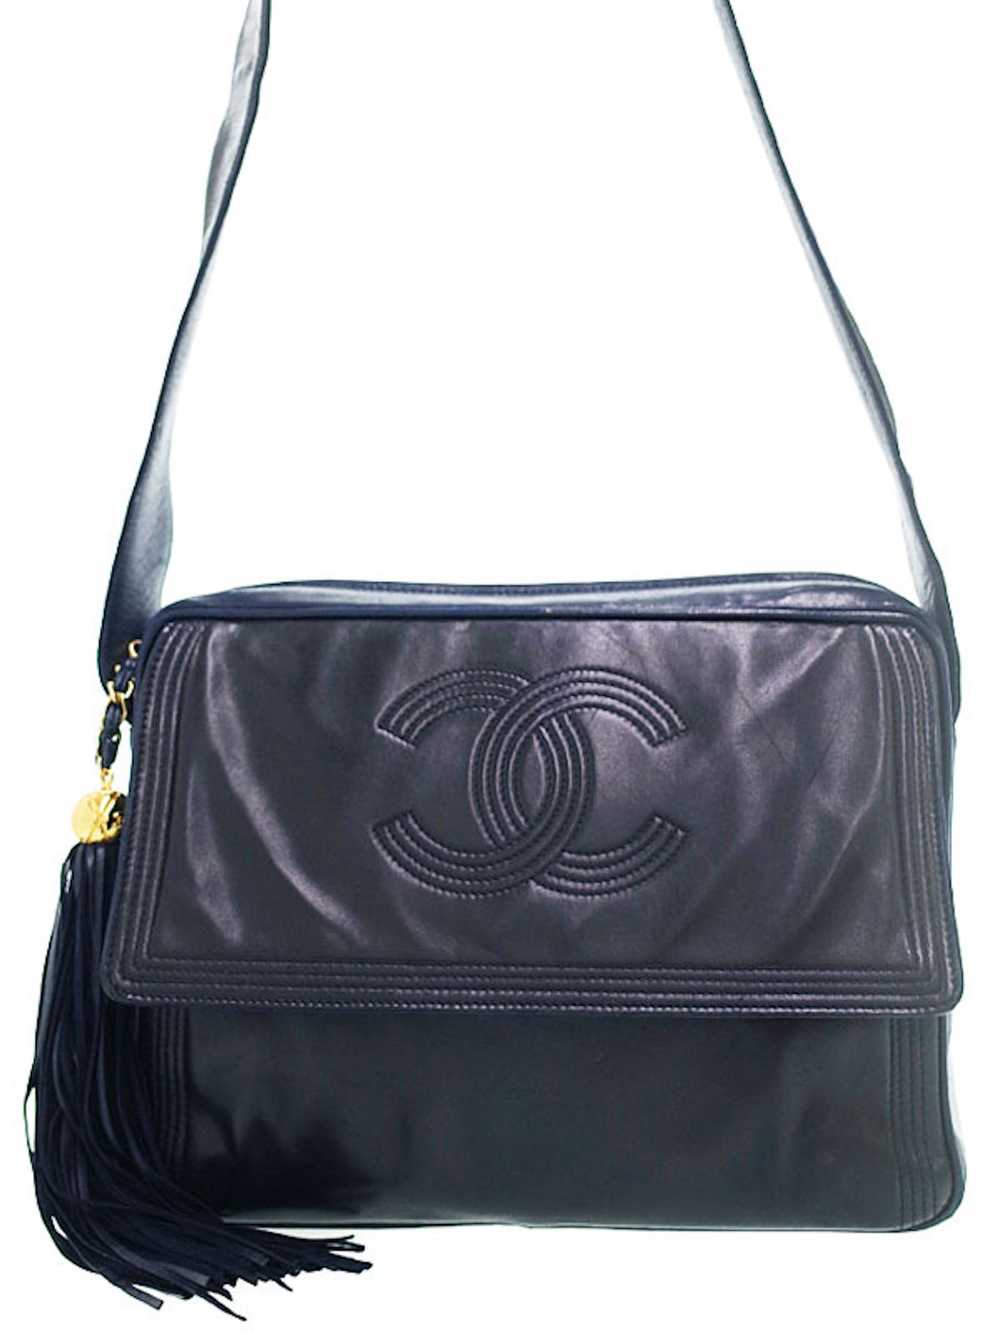 Chanel Chanel Coco Mark Shoulder Bag Black x Navy - image 1